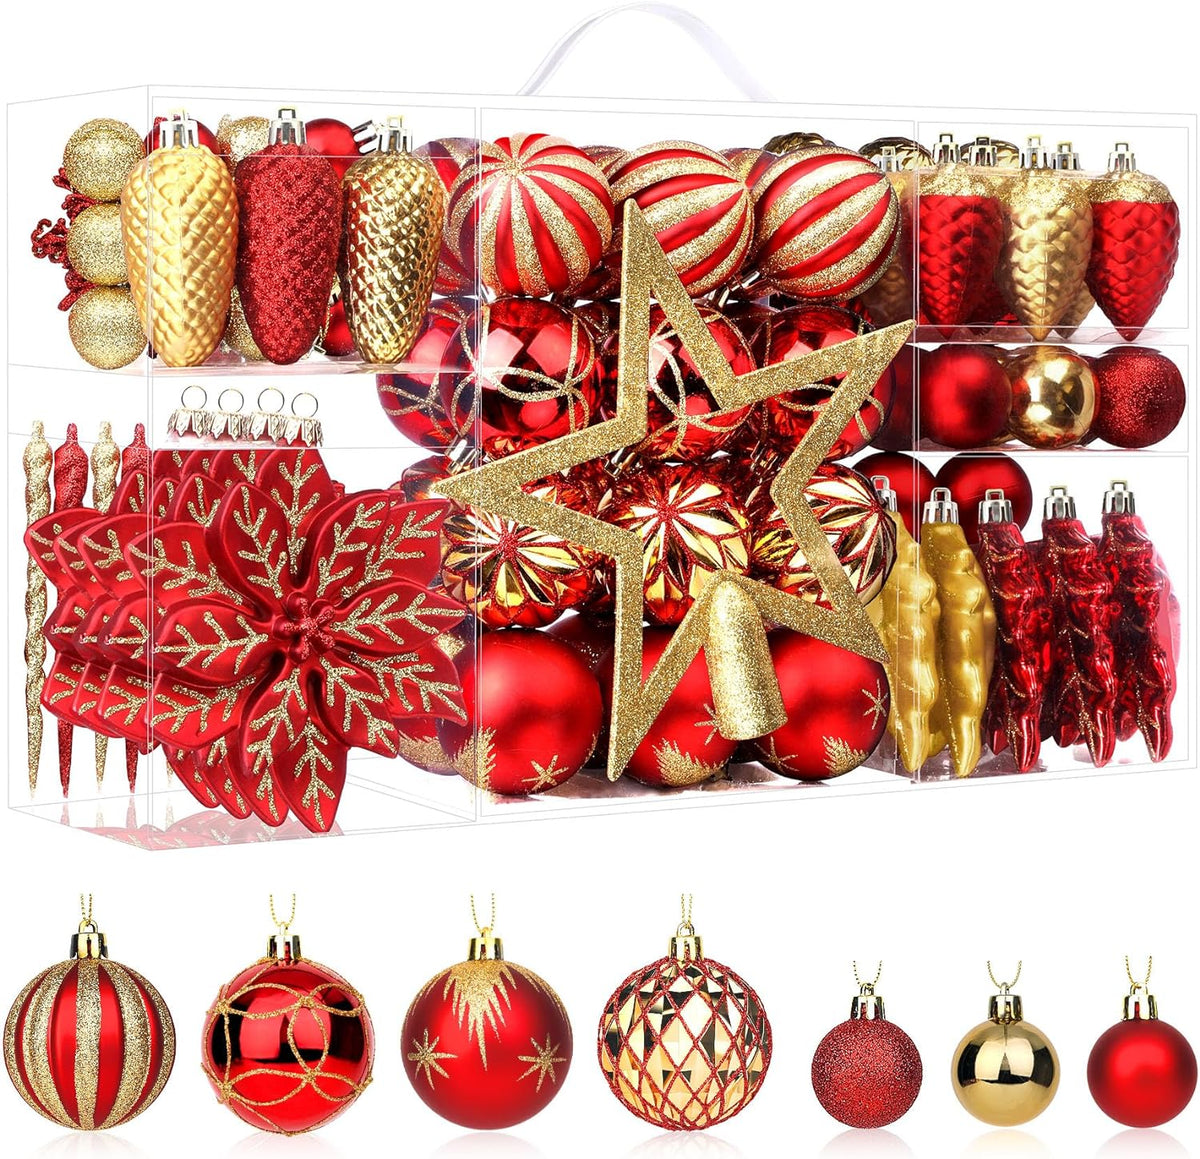 106pcs Red & Gold Christmas Balls Ornaments Set